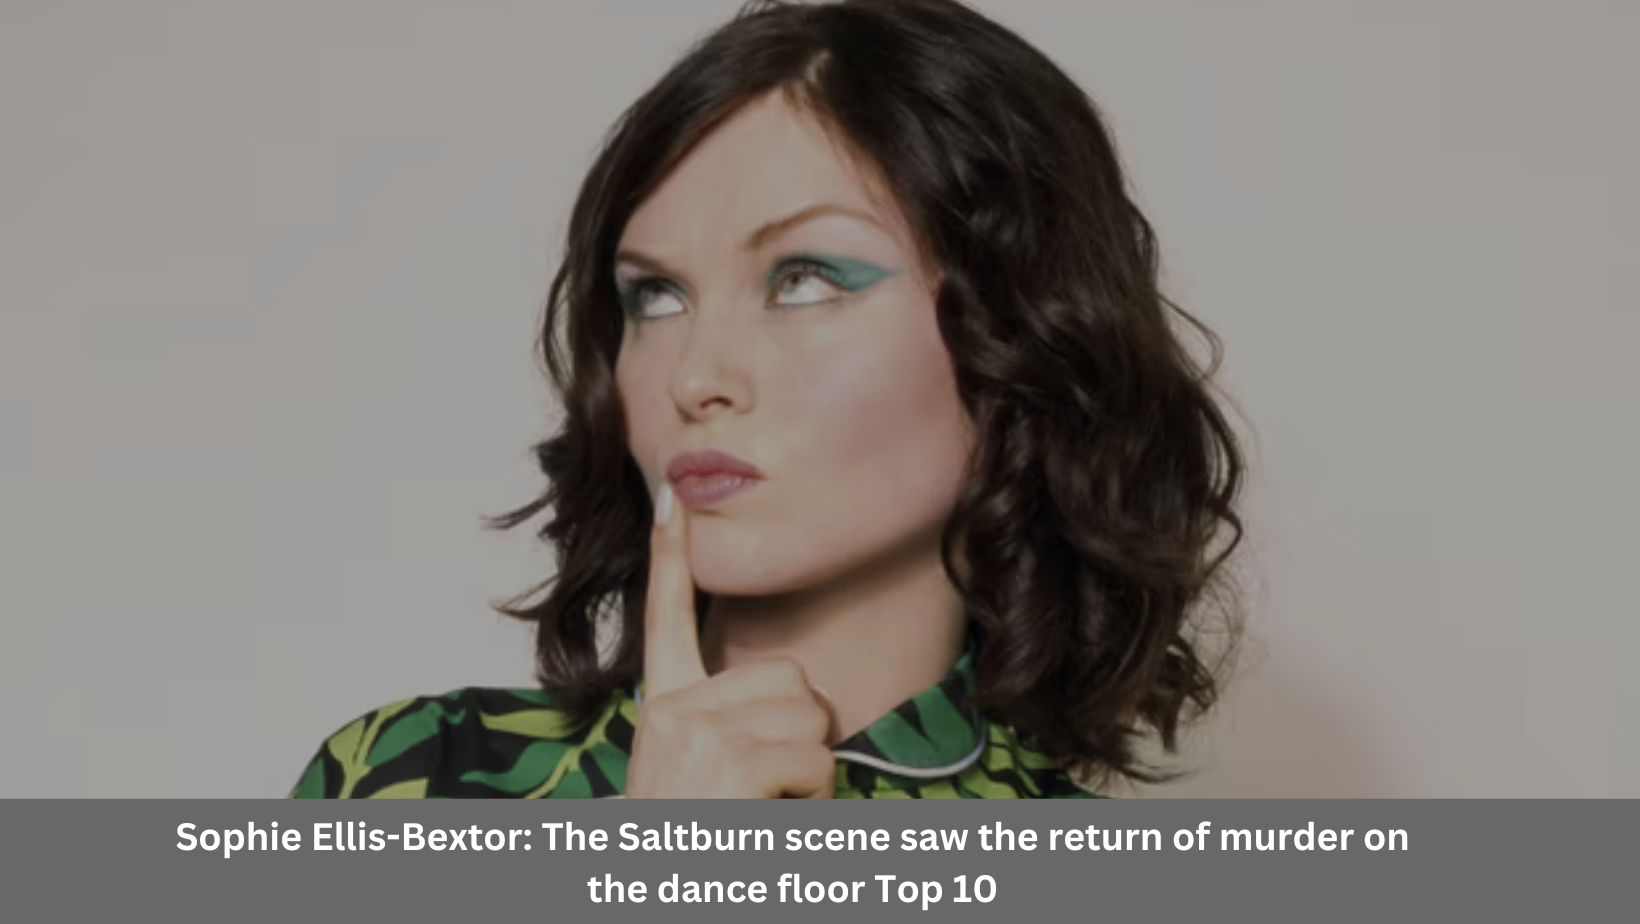 Sophie Ellis-Bextor: The Saltburn scene saw the return of murder on the dance floor Top 10